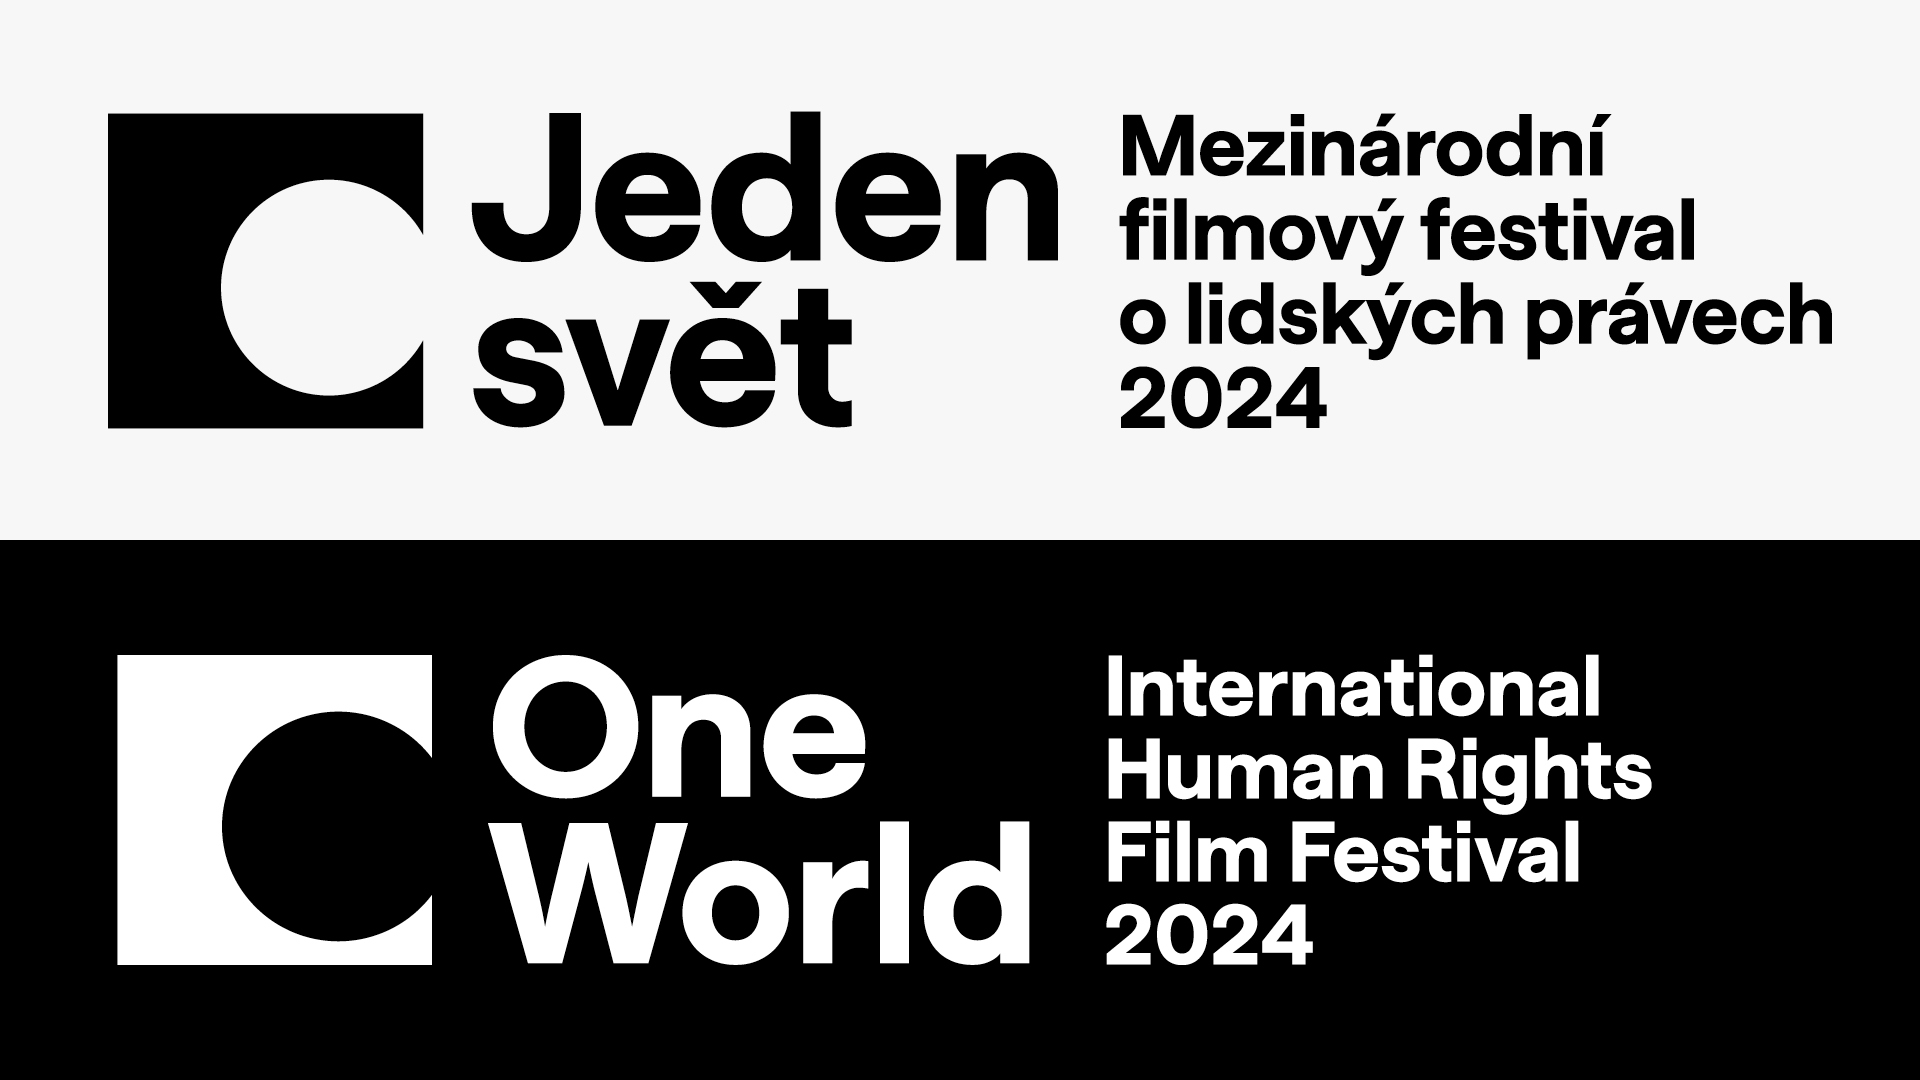 New logotype One World. Graphic banner